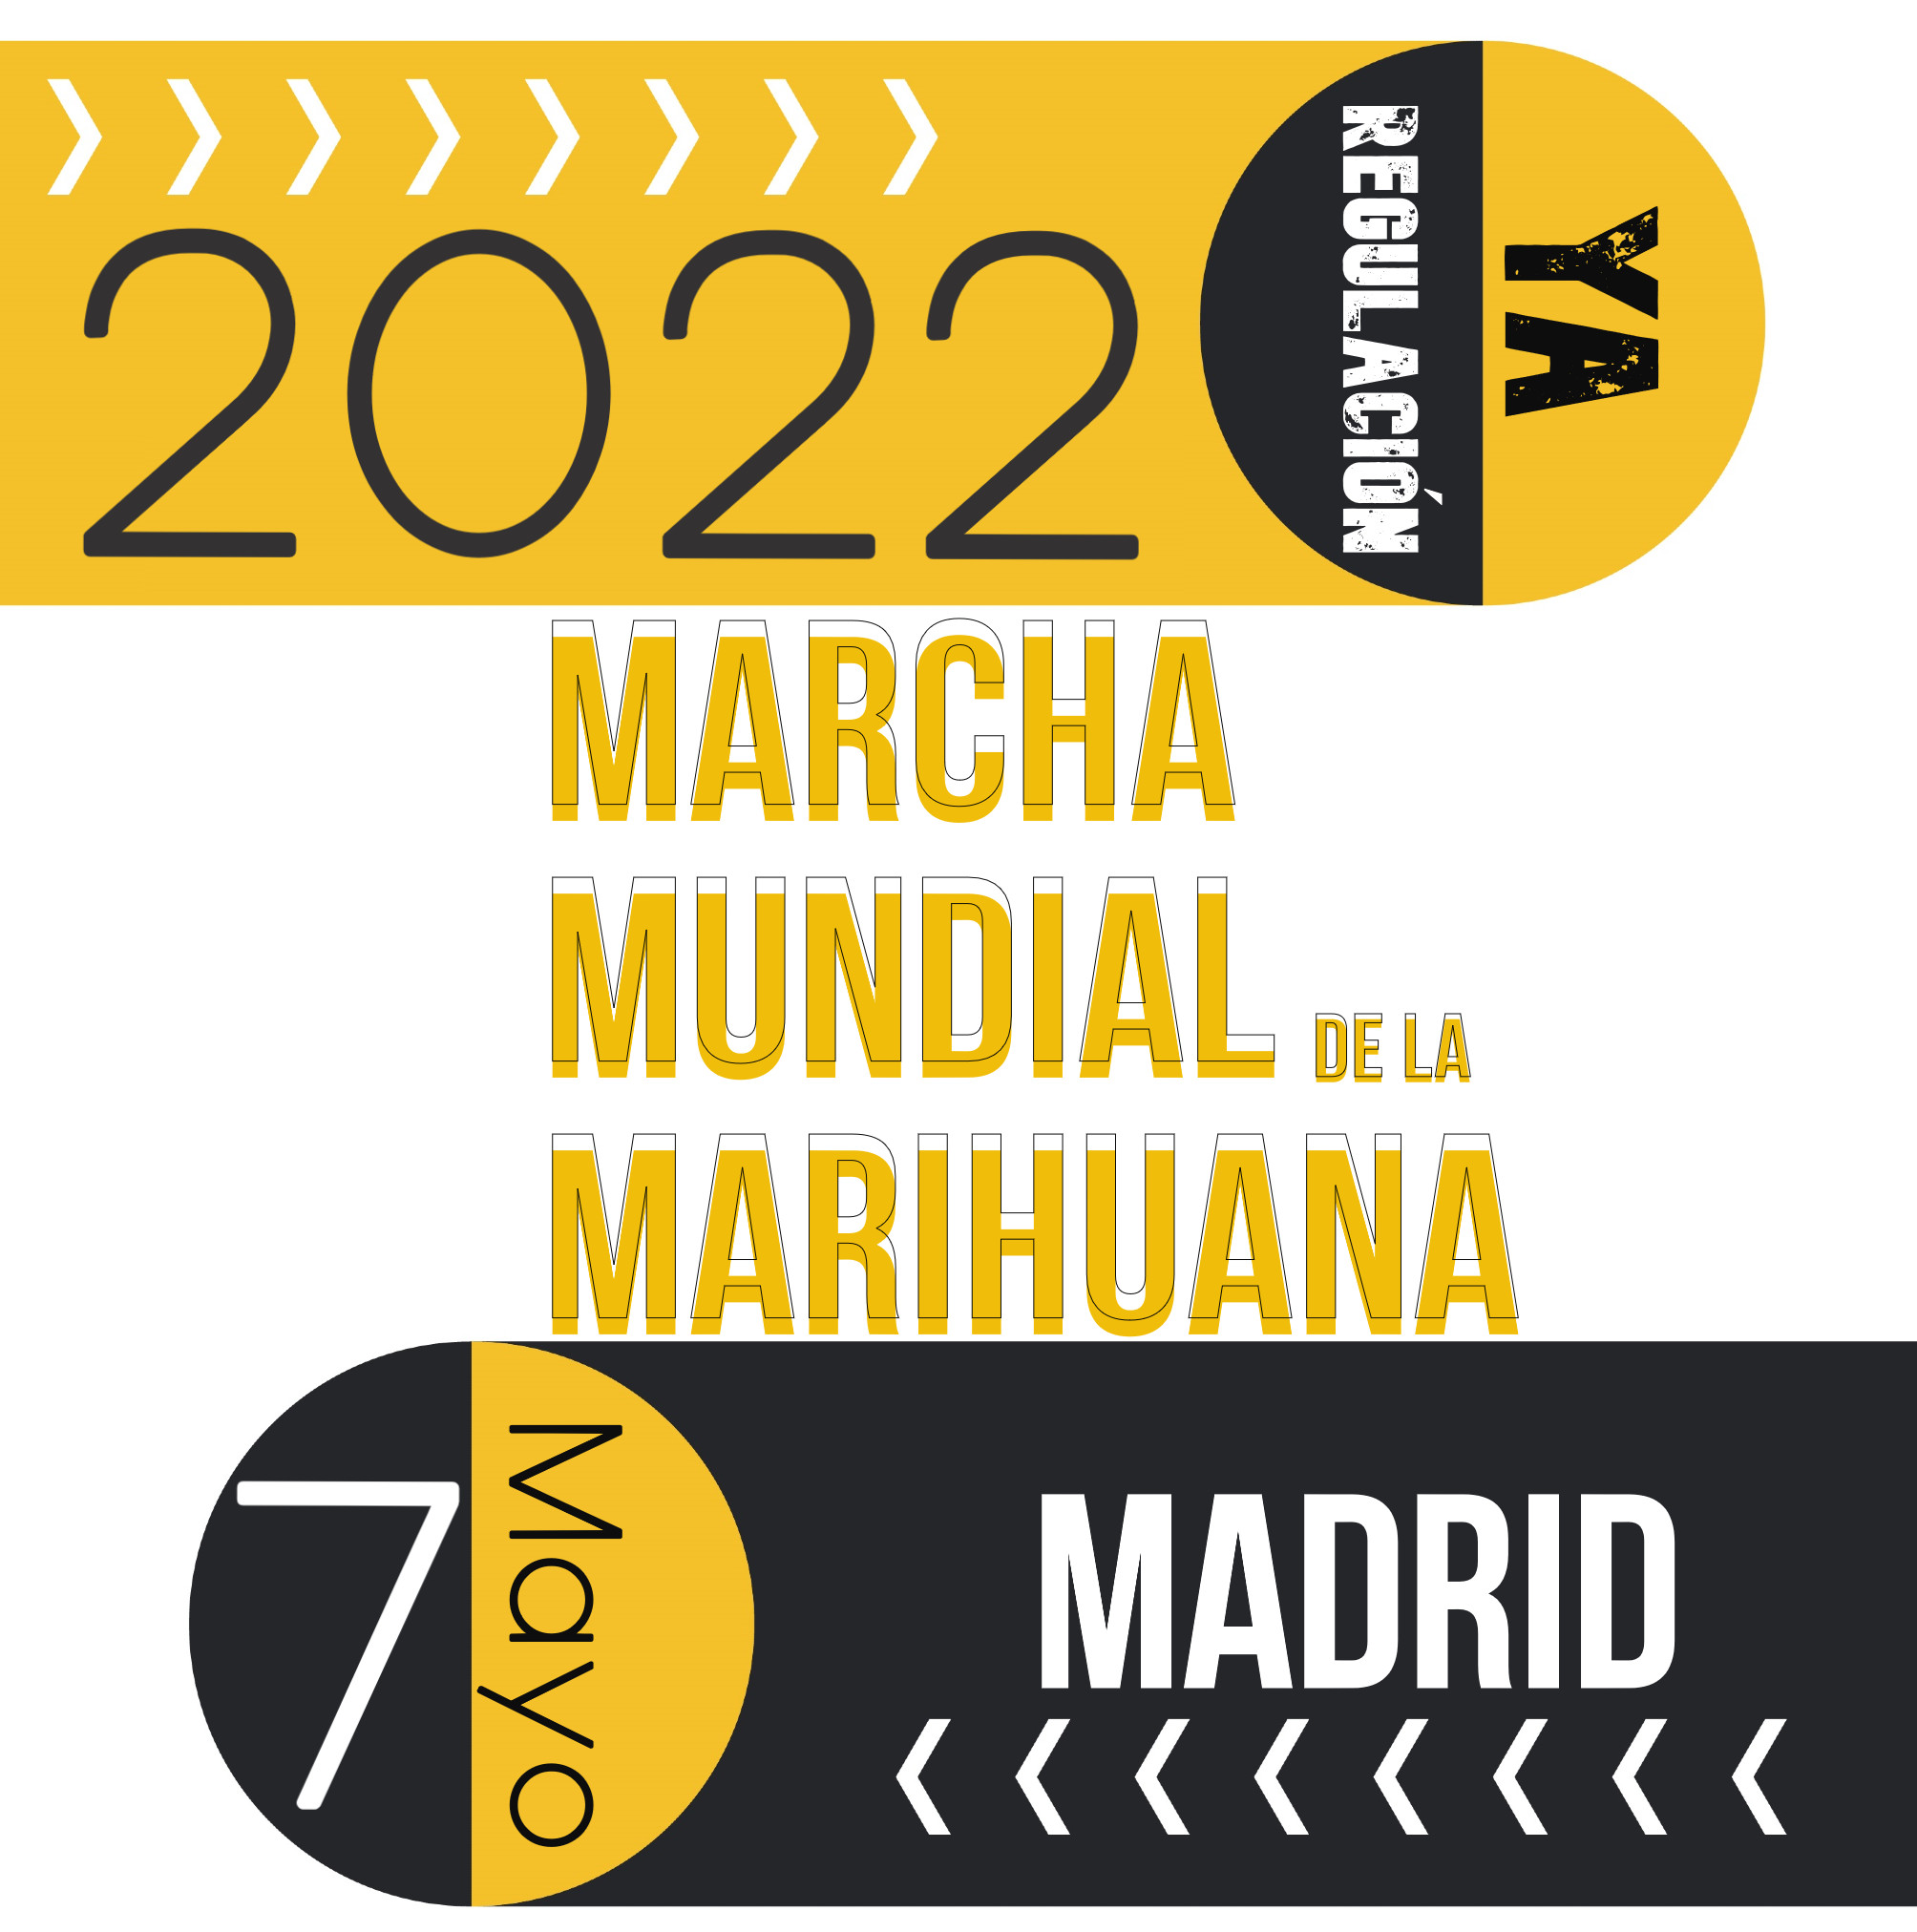 Marcha Mundial de la Marihuana en Madrid 2022 